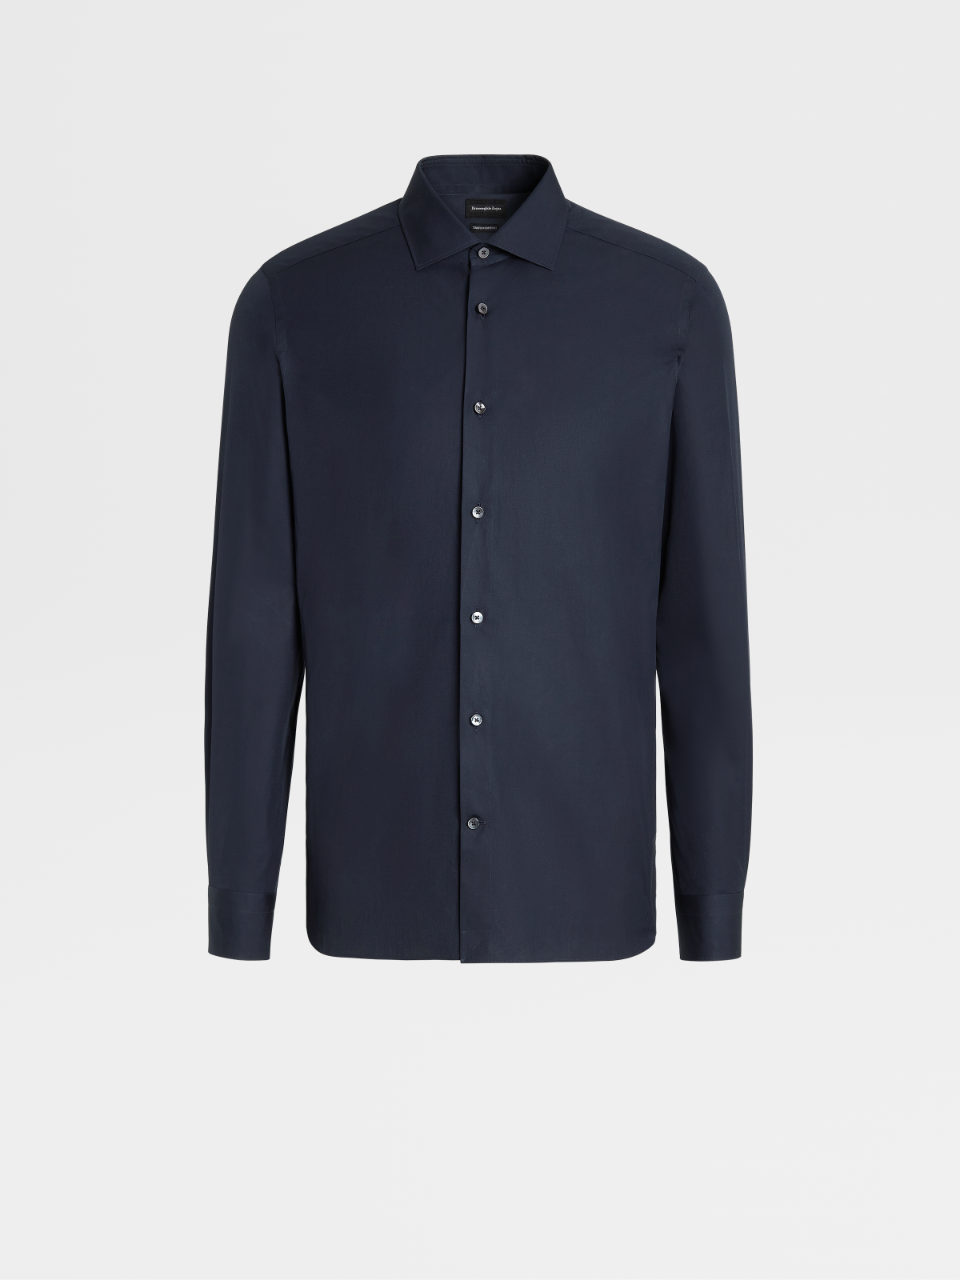 Navy Blue Trofeo™ Comfort Cotton Tailoring Shirt, City Slim Fit